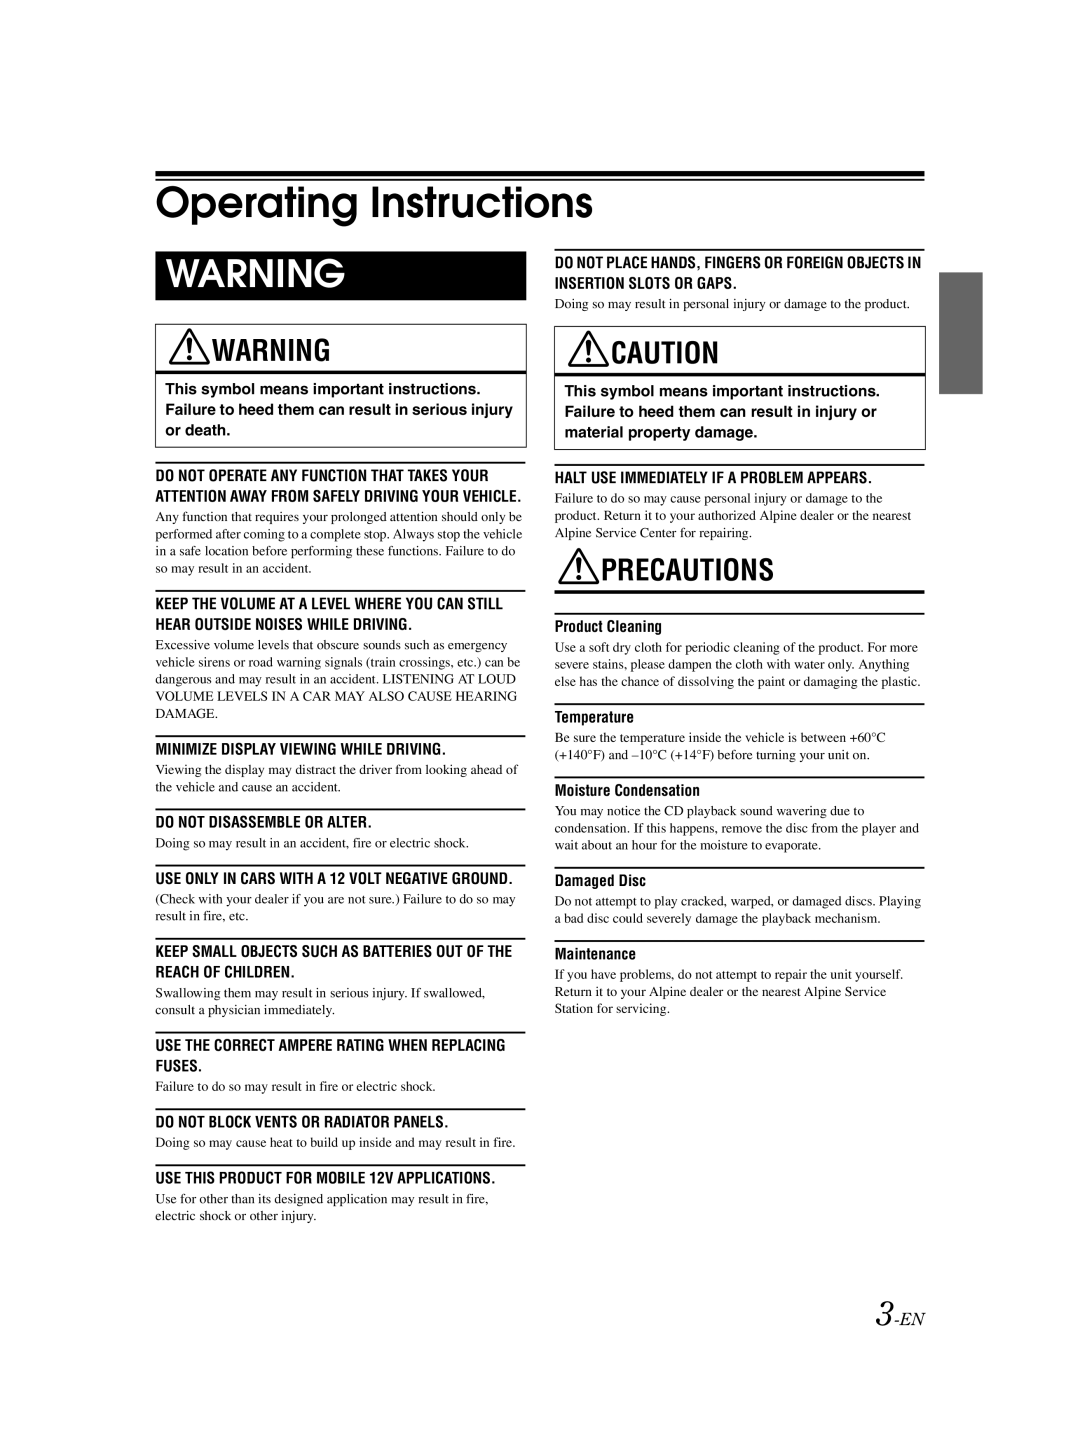 Alpine CDE-9873 owner manual Operating Instructions, Precautions, 3-EN 